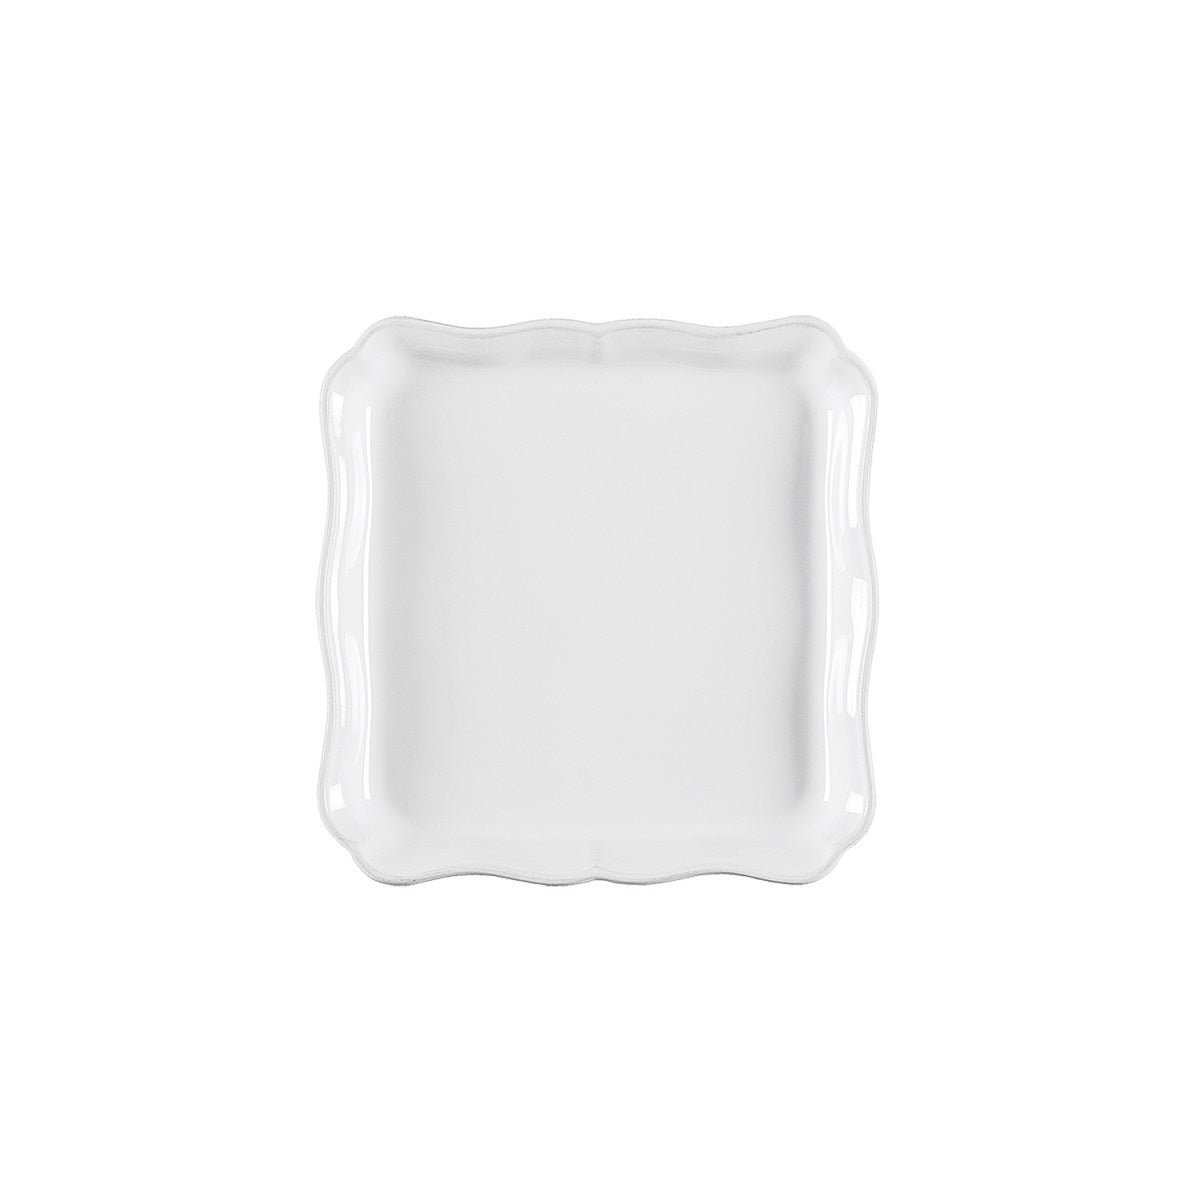 COSTA NOVA | Alentejo 前菜器皿禮品套裝 (白色)